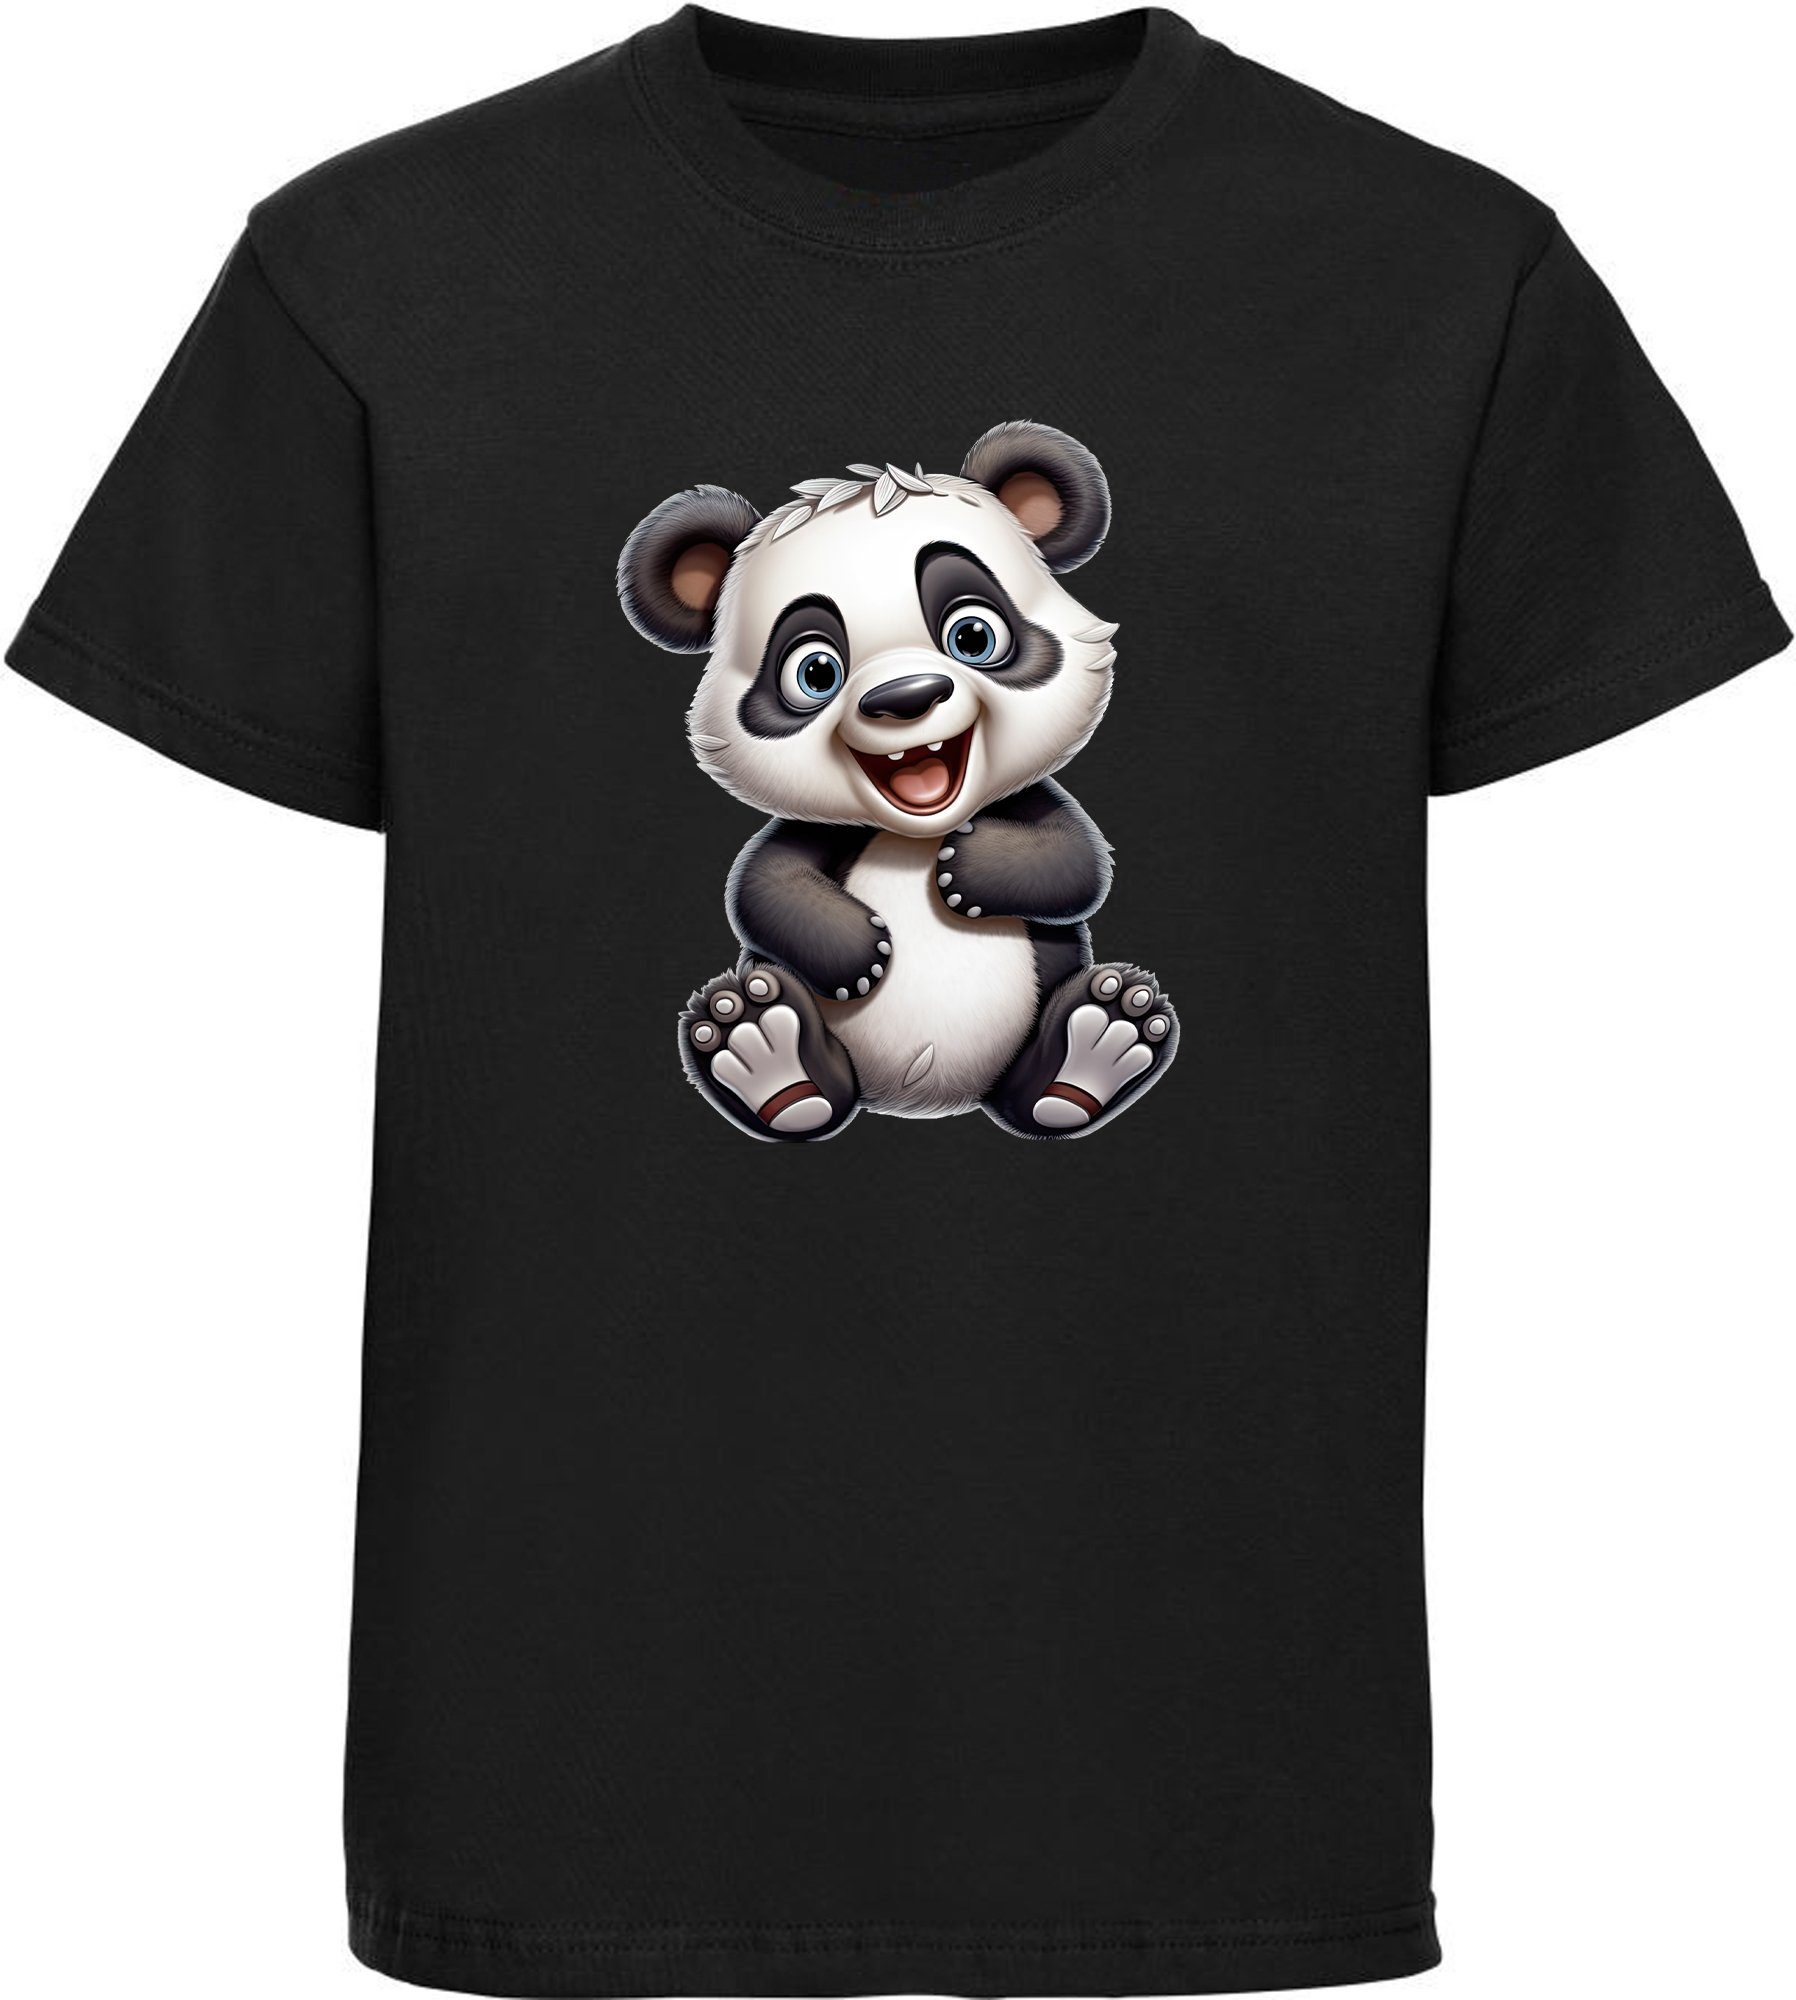 MyDesign24 T-Shirt Kinder Wildtier Print Shirt bedruckt - Baby Panda Bär Baumwollshirt mit Aufdruck, i277 schwarz